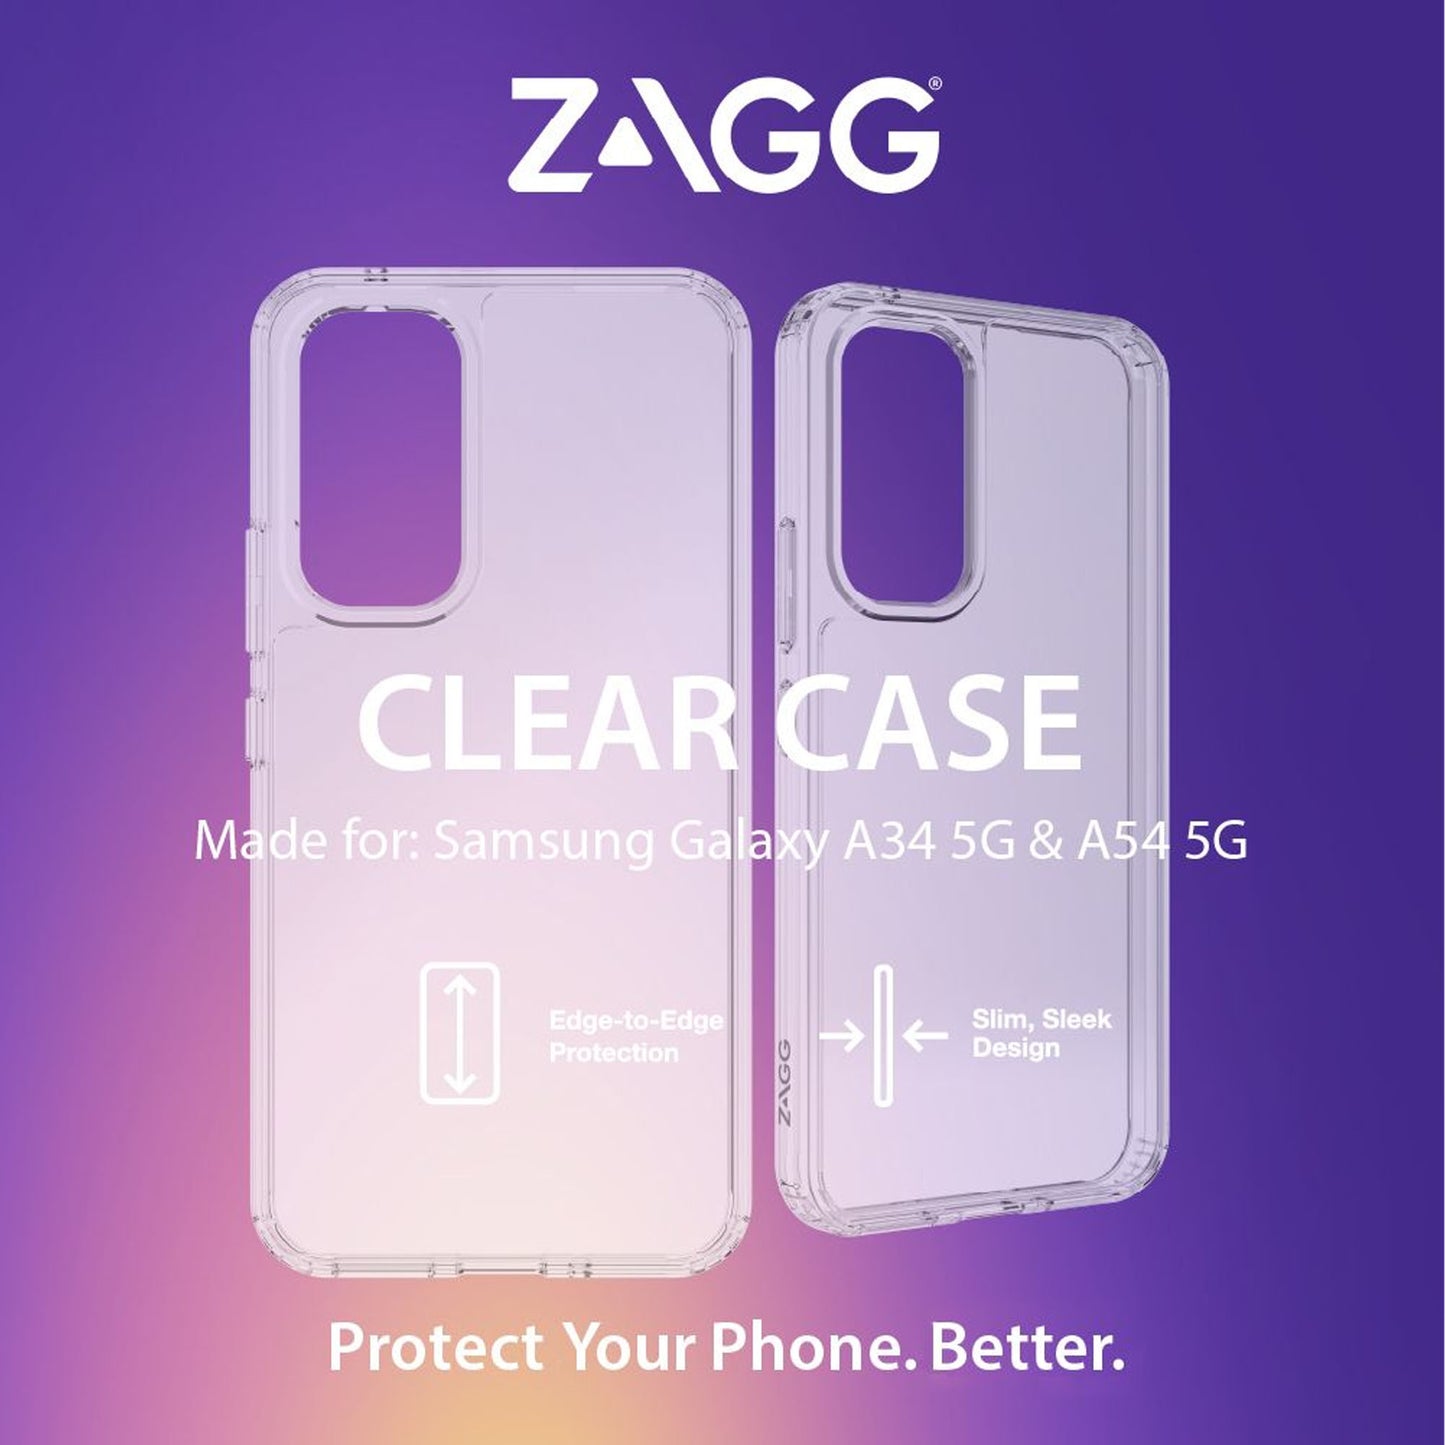 ZAGG Clear Case for Samsung Galaxy A34 (Barcode: 840056179905 )